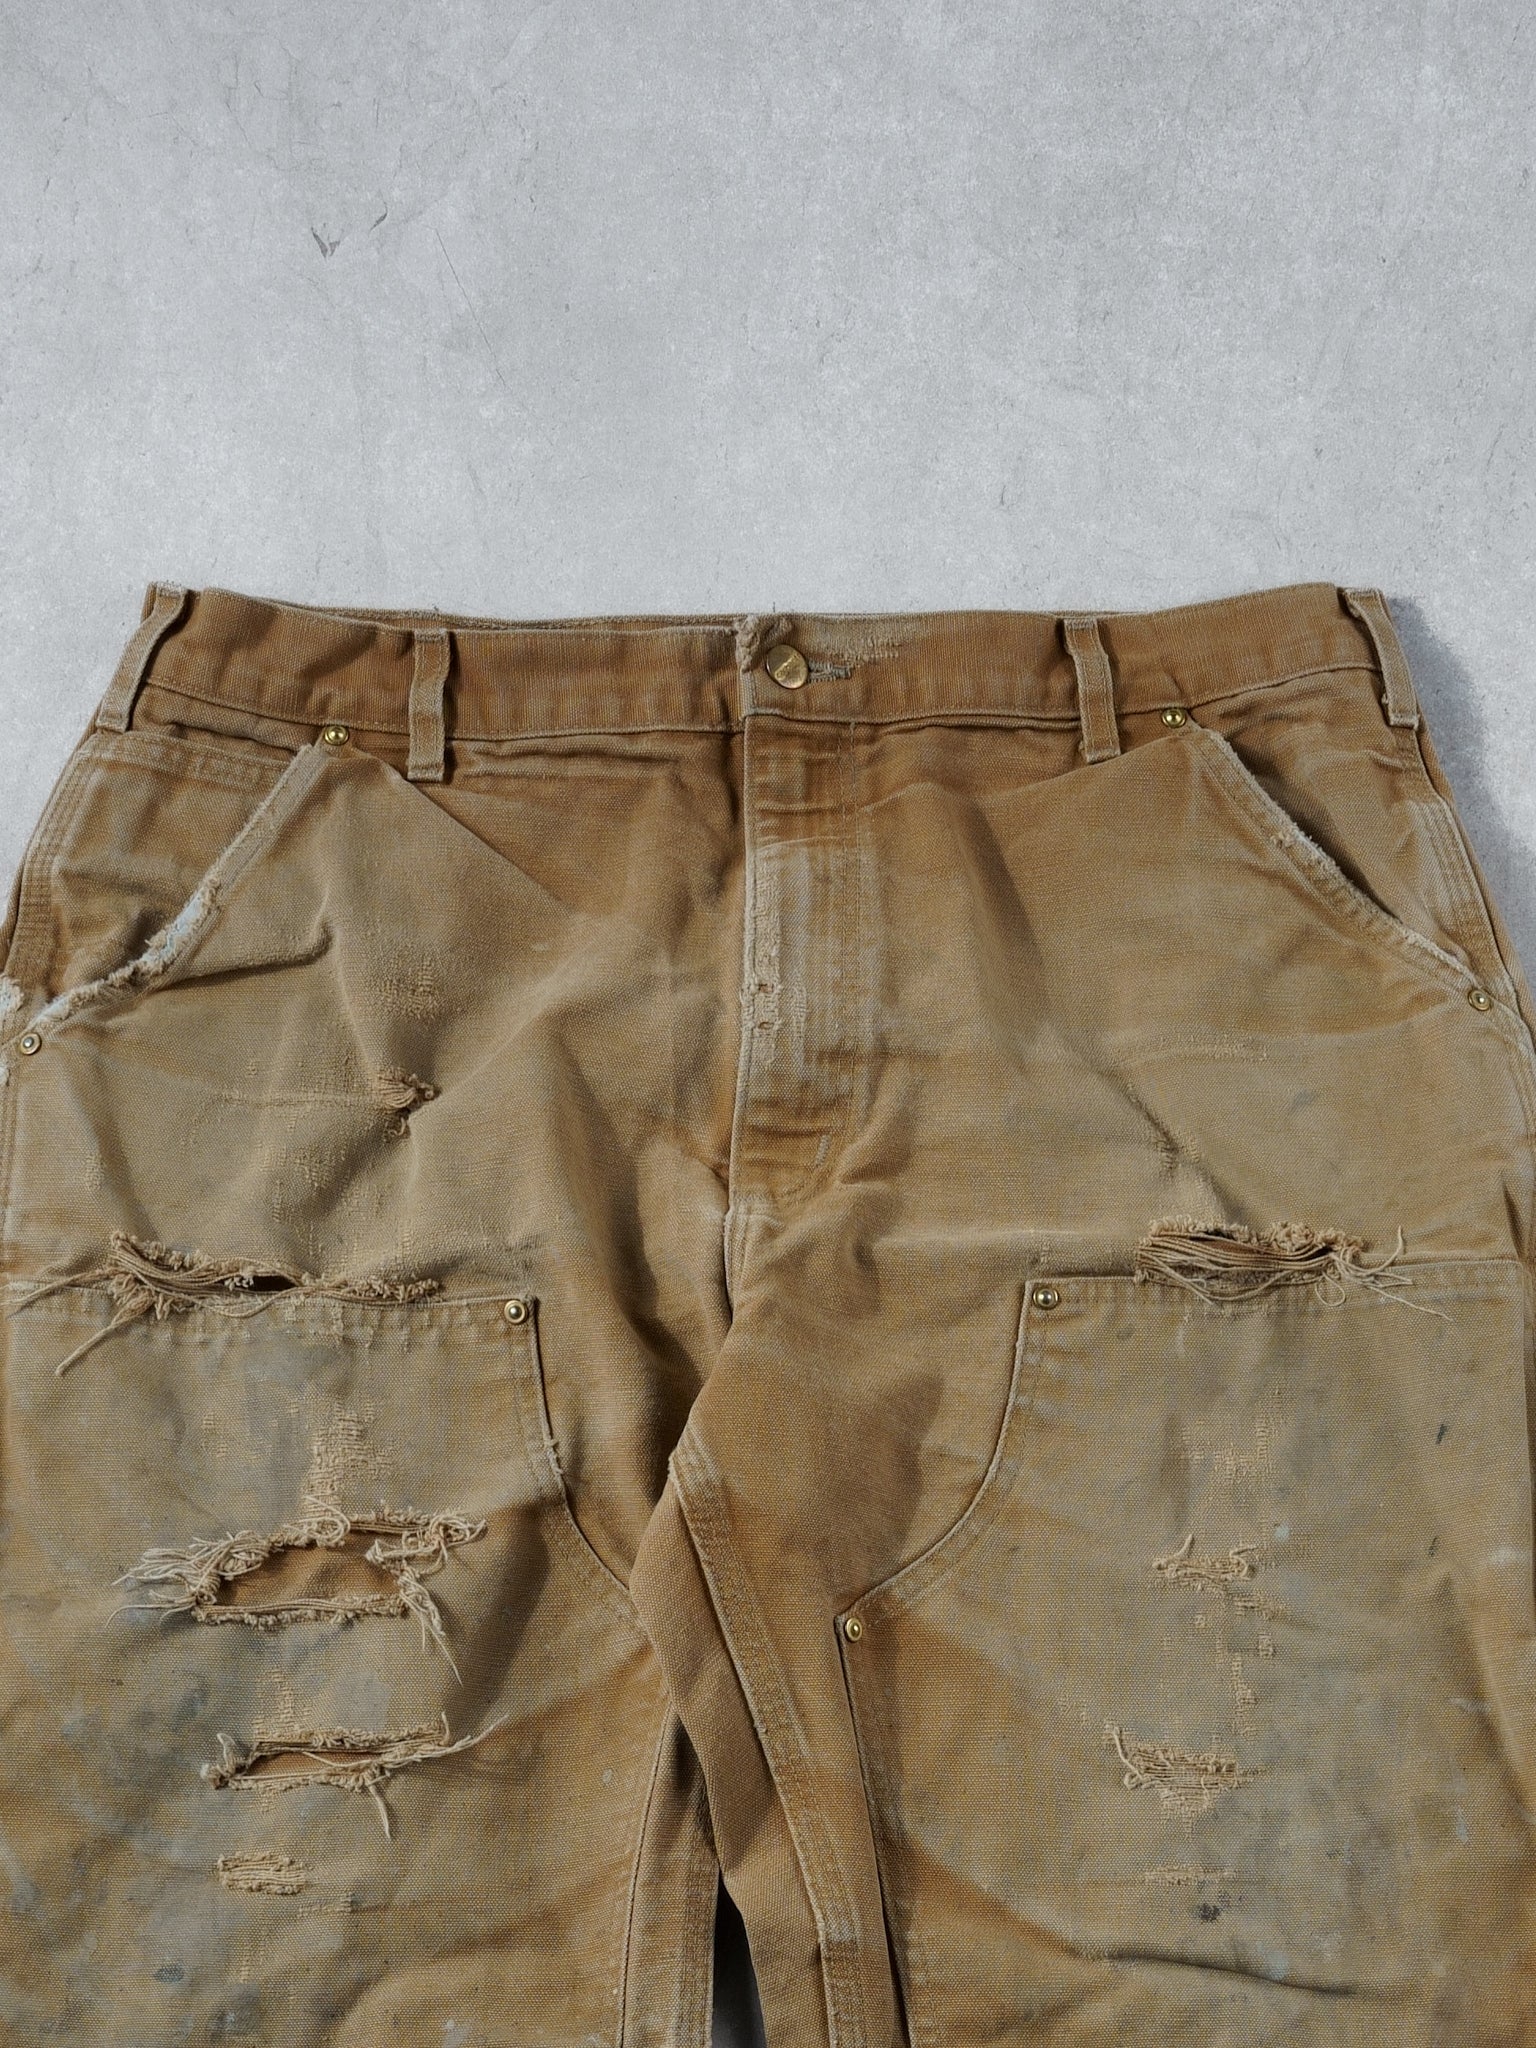 Vintage 90s Khaki Carhartt Double Knee Distressed Carpenter Pants (34x31)